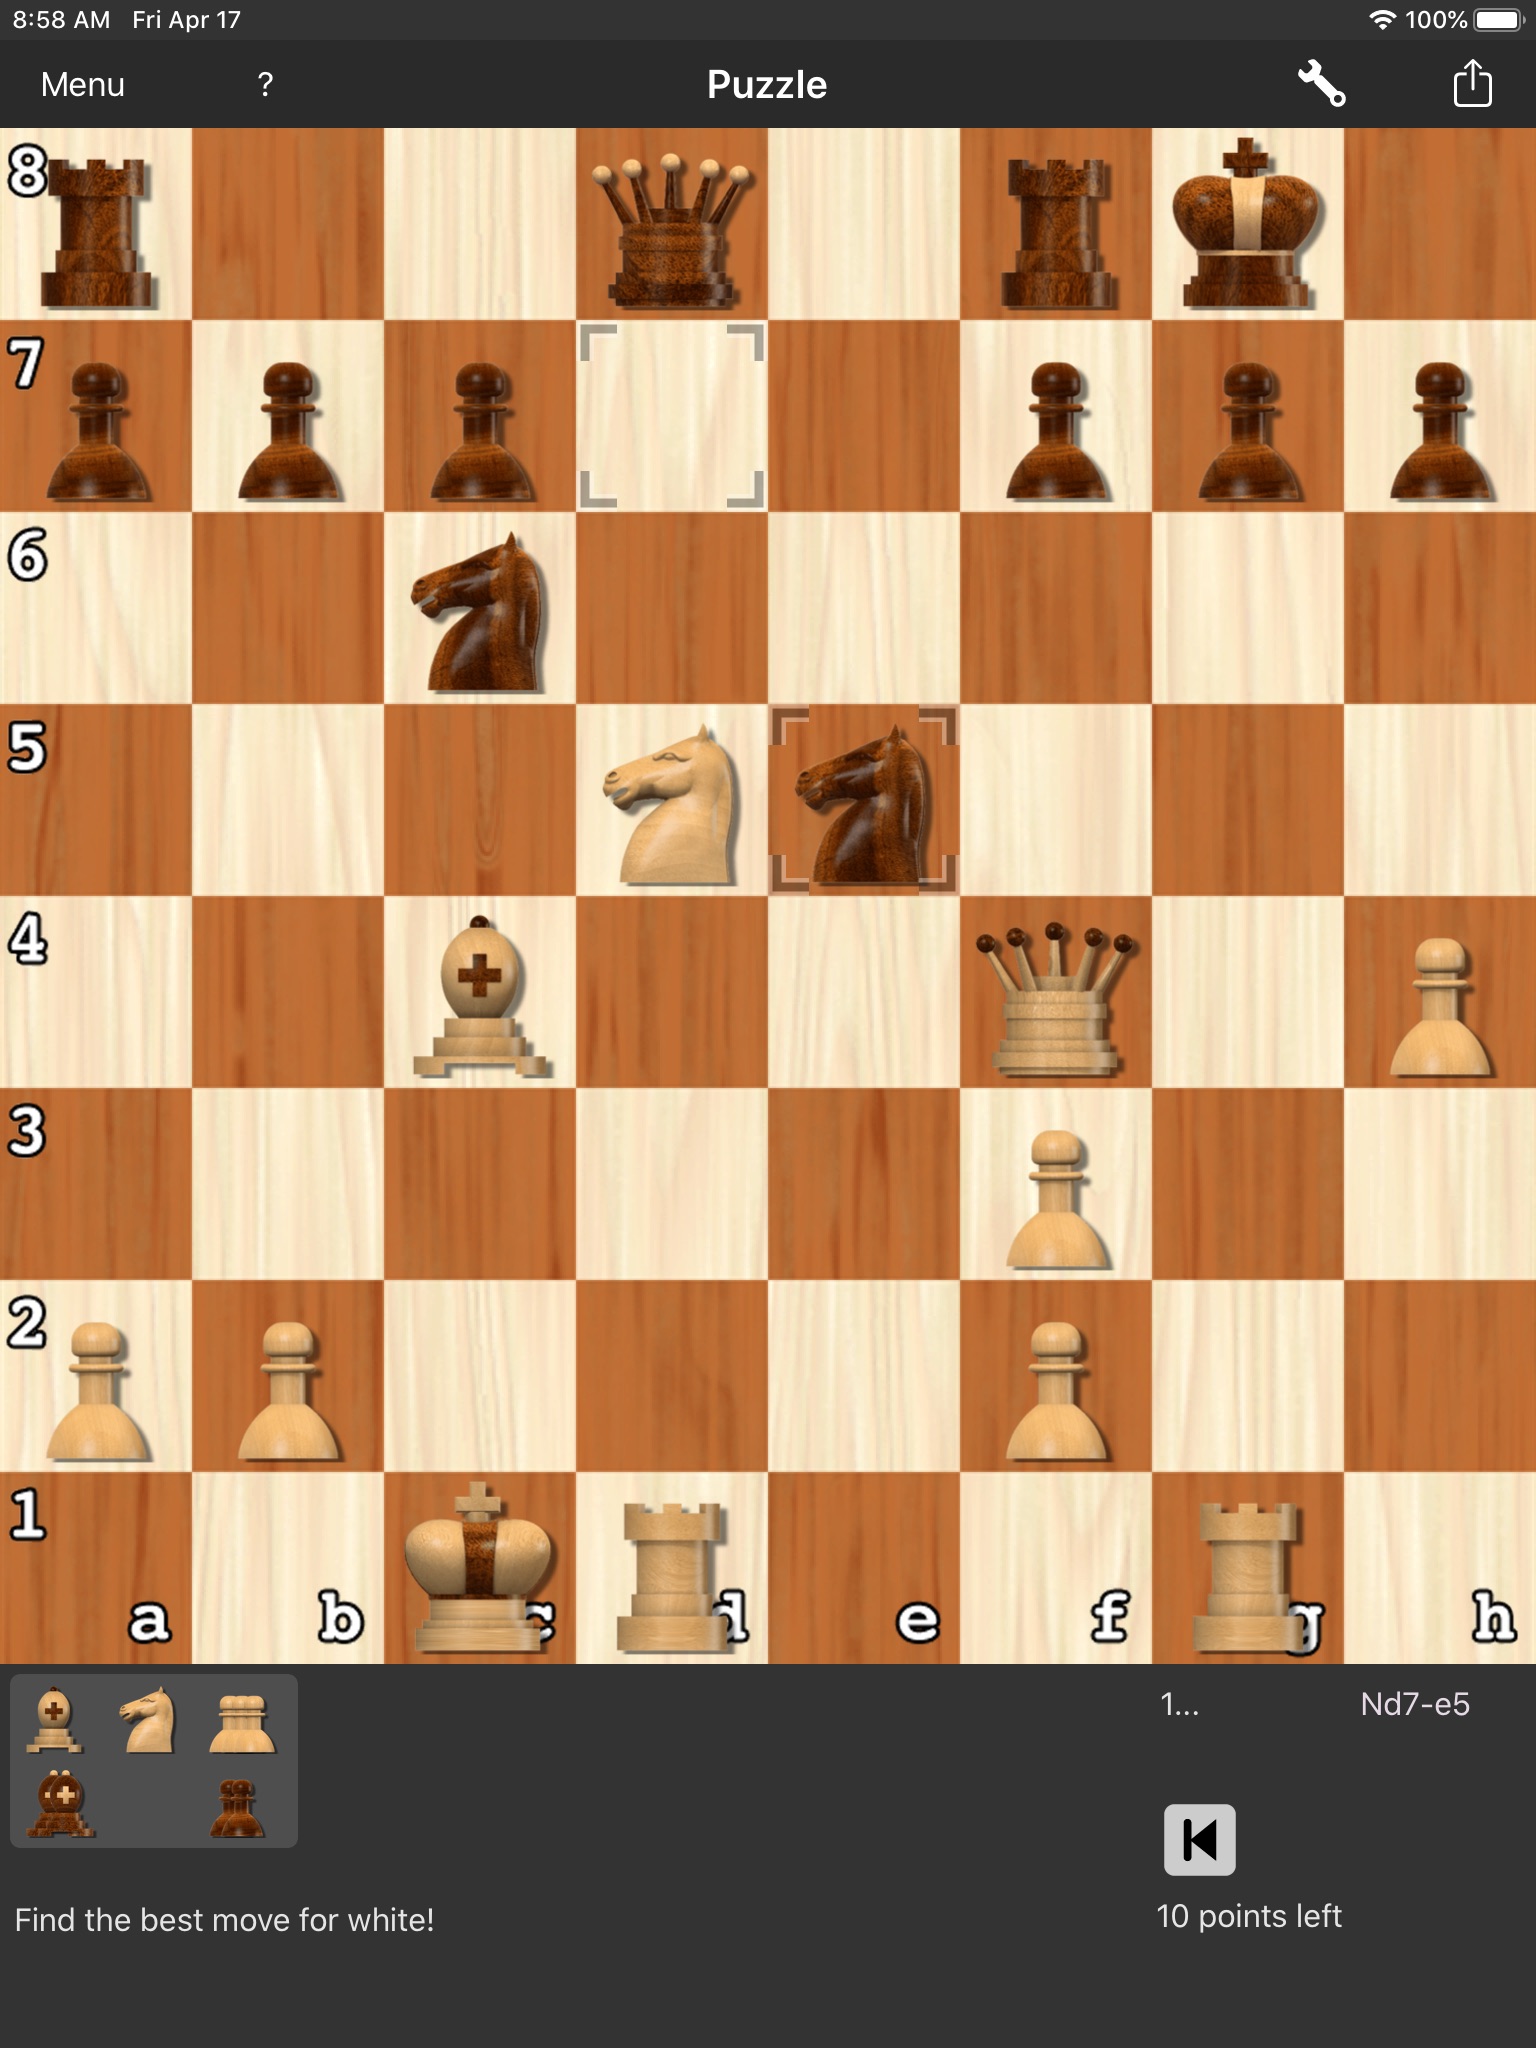 Shredder Chess HD (Intl.) screenshot 2